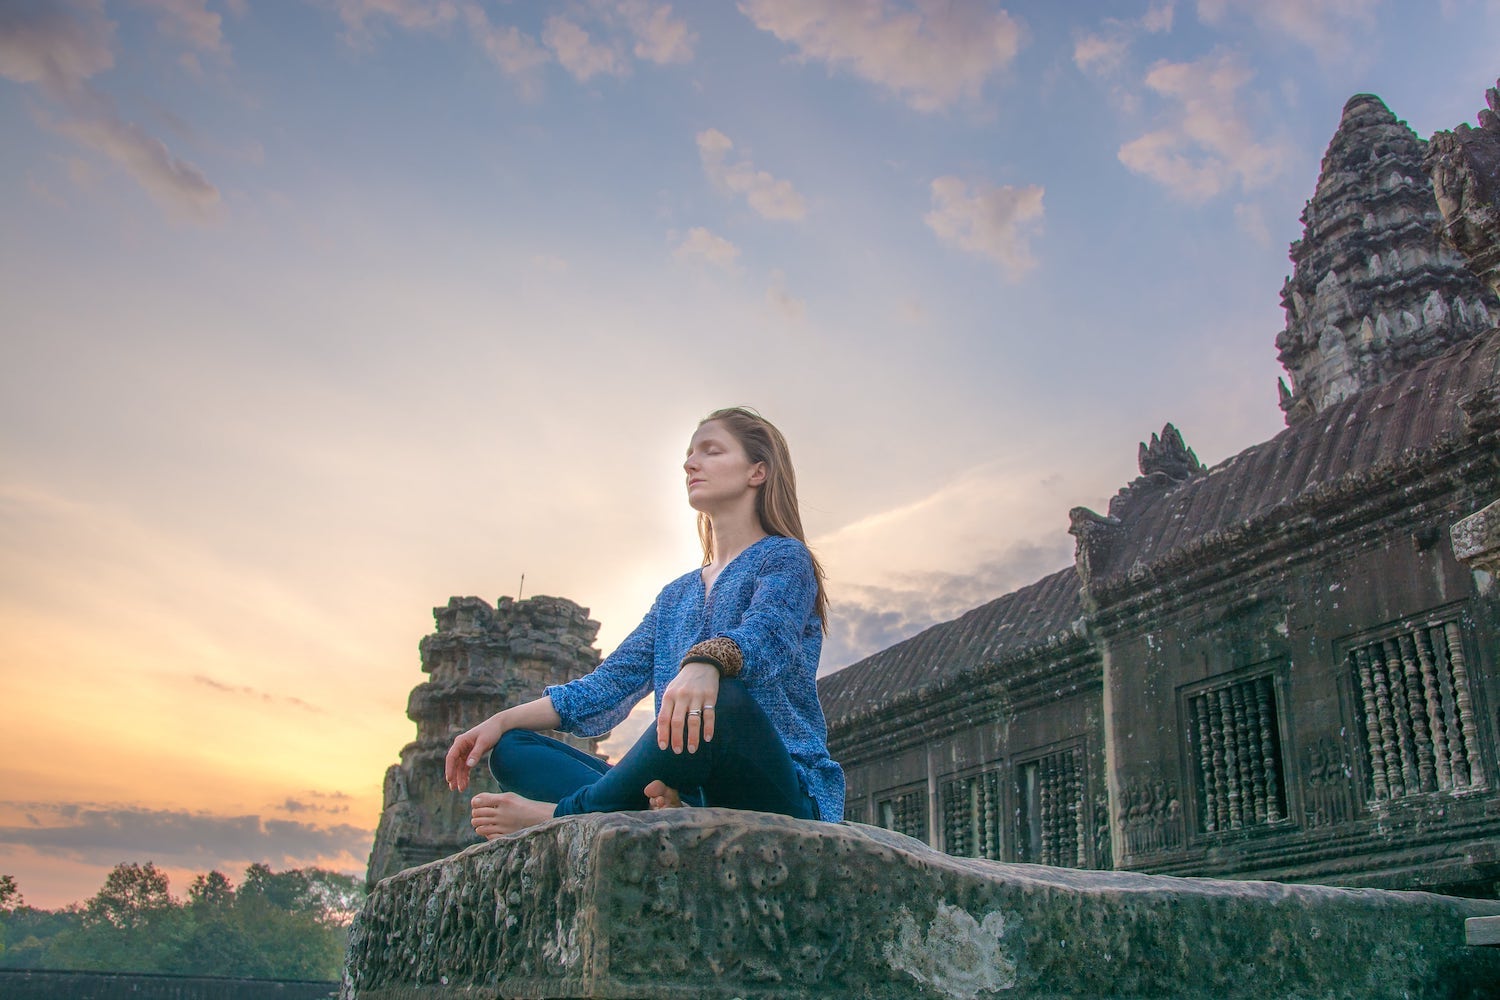 Article value Angkor Wat Bodia apothecary natural cosmetics